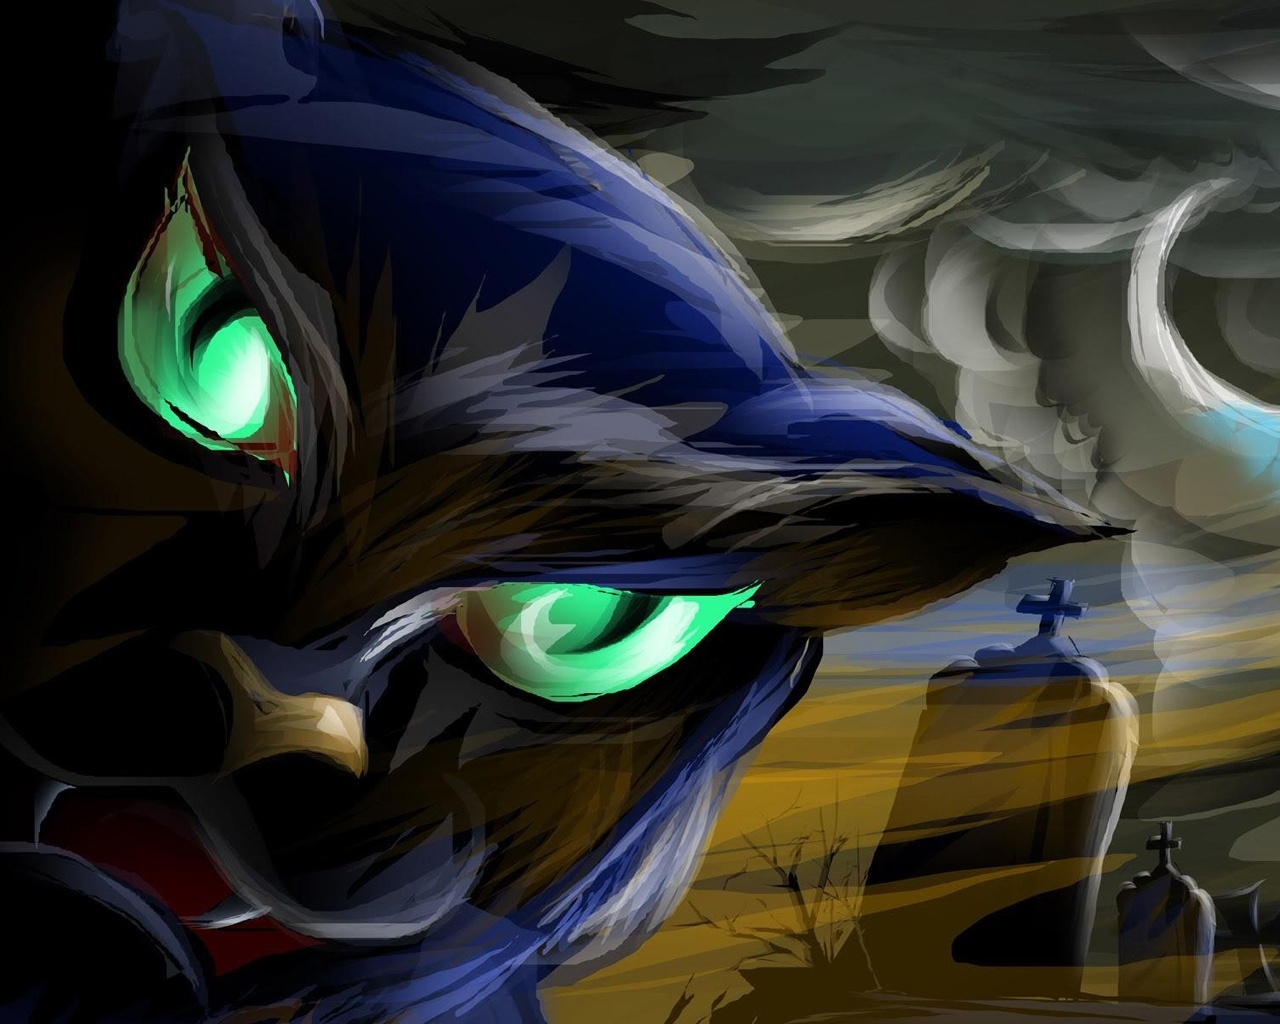 Halloween Black Cat Illustration for 1280 x 1024 resolution